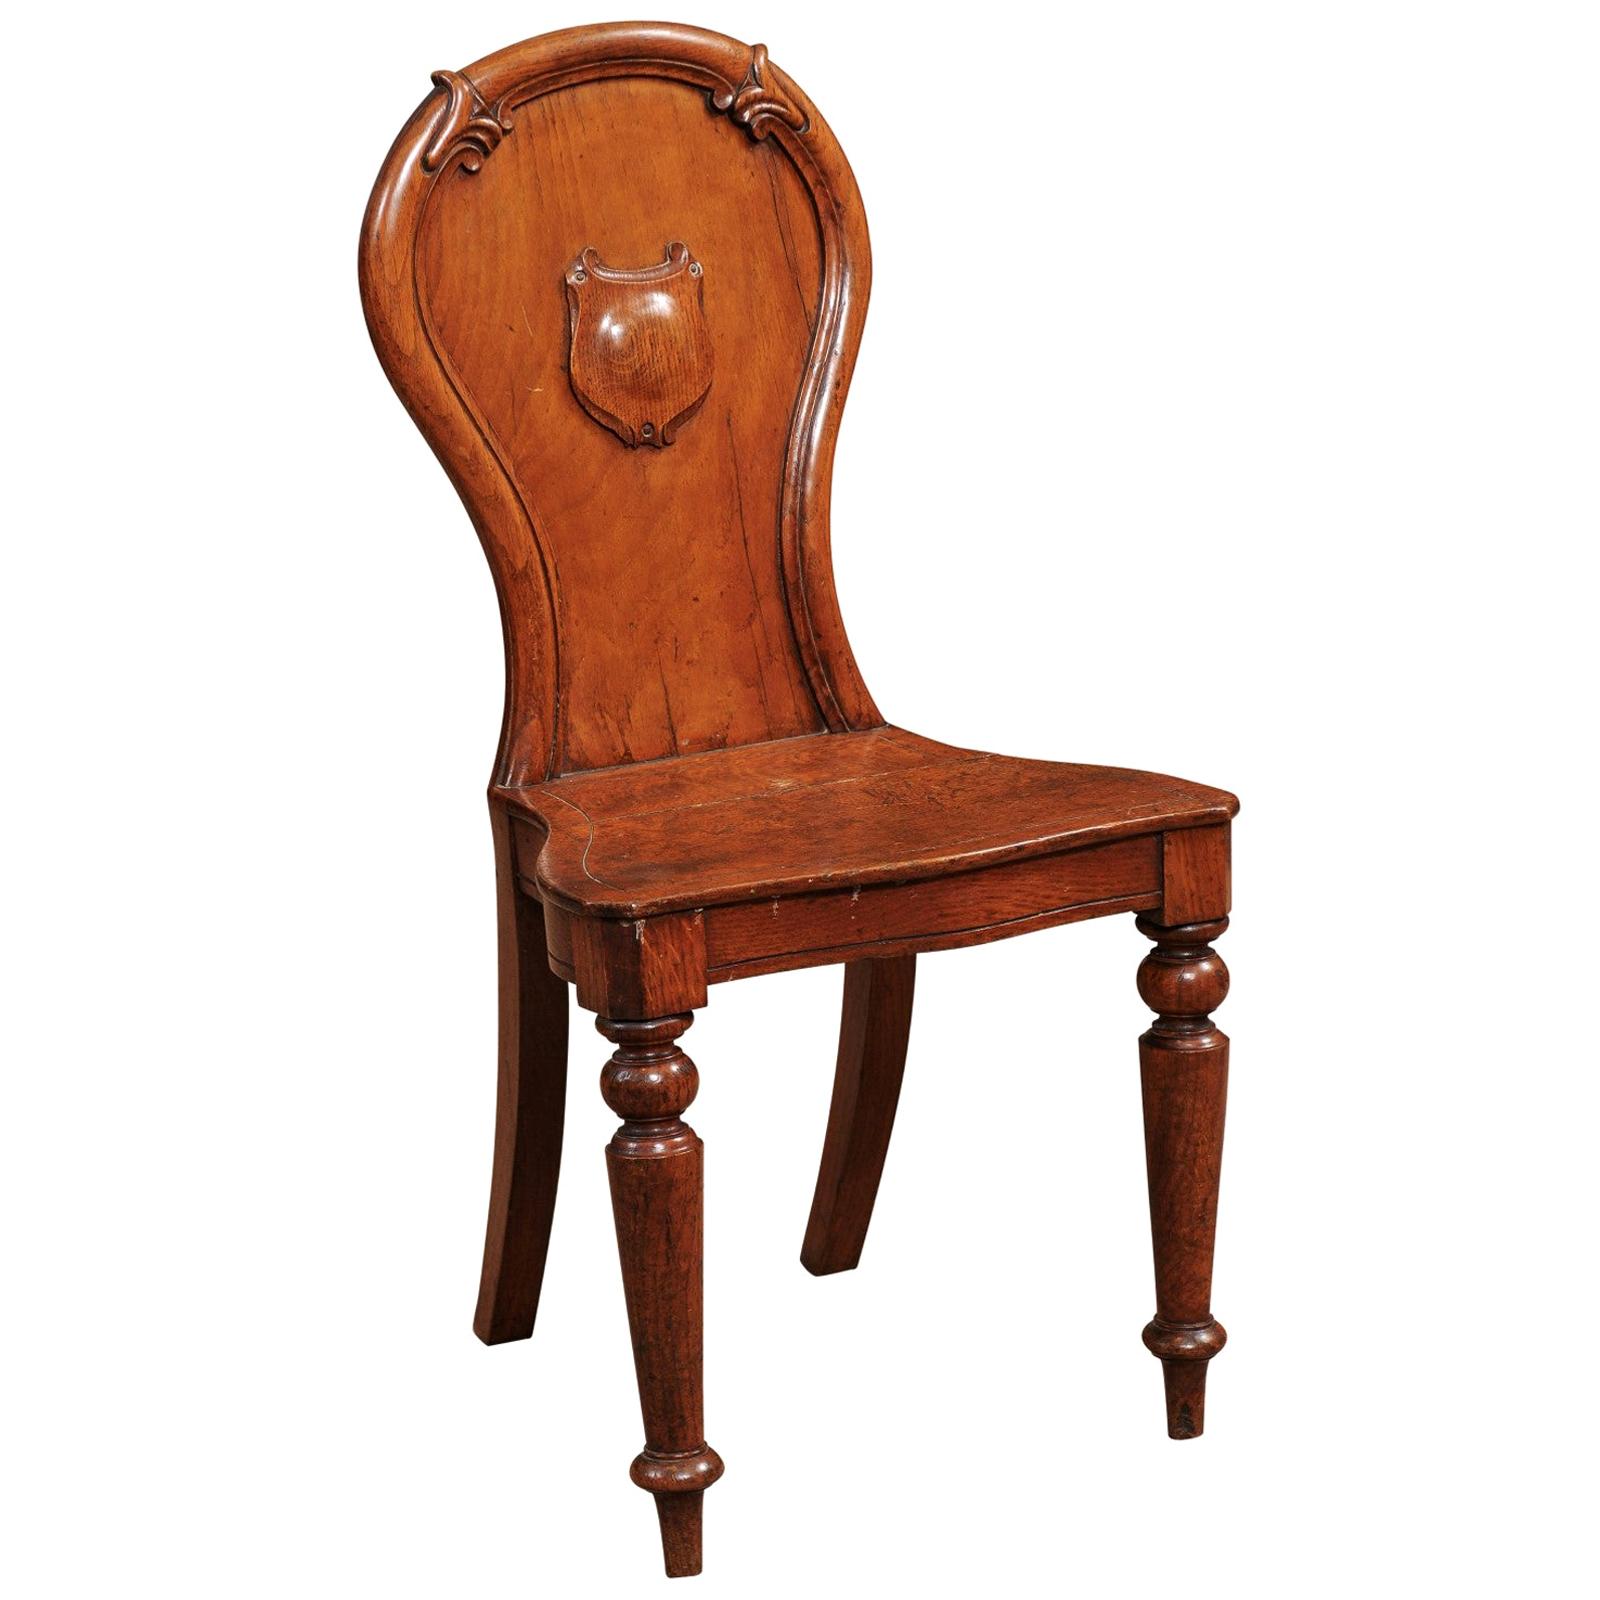 Late 19th Century English Oak Hall Chair